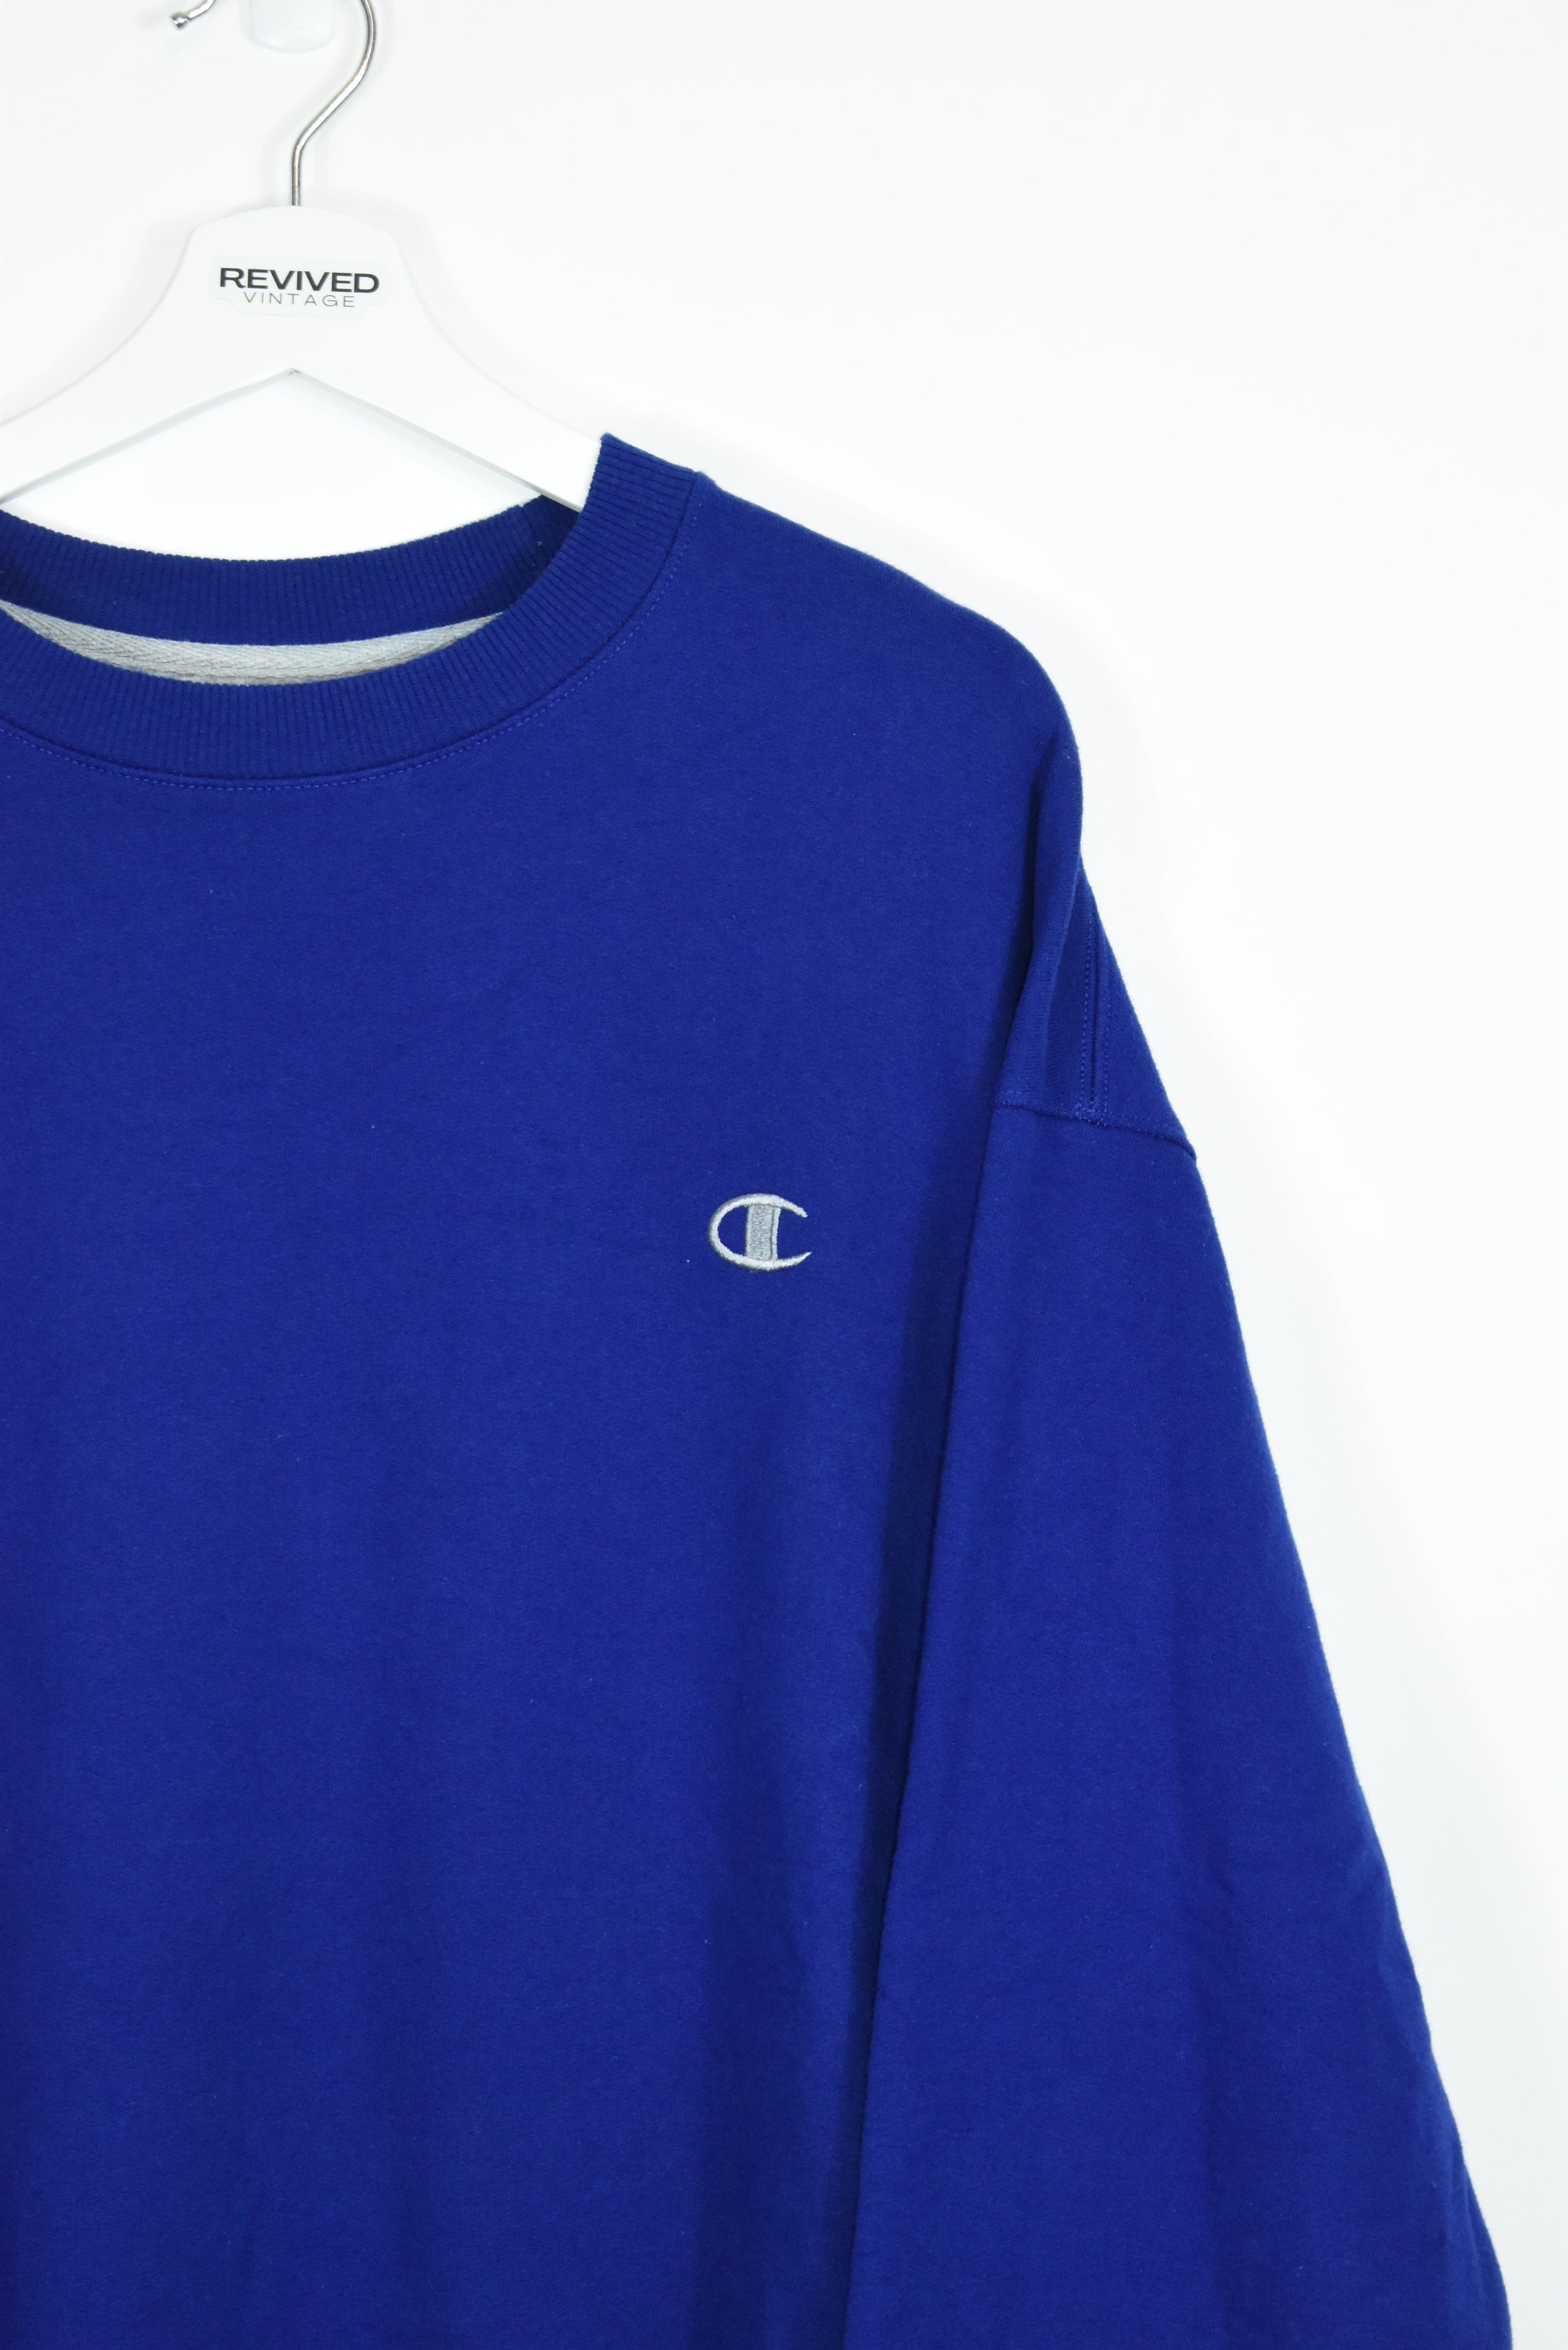 Vintage Champion Small Logo Embroidery Blue Sweatshirt XXL